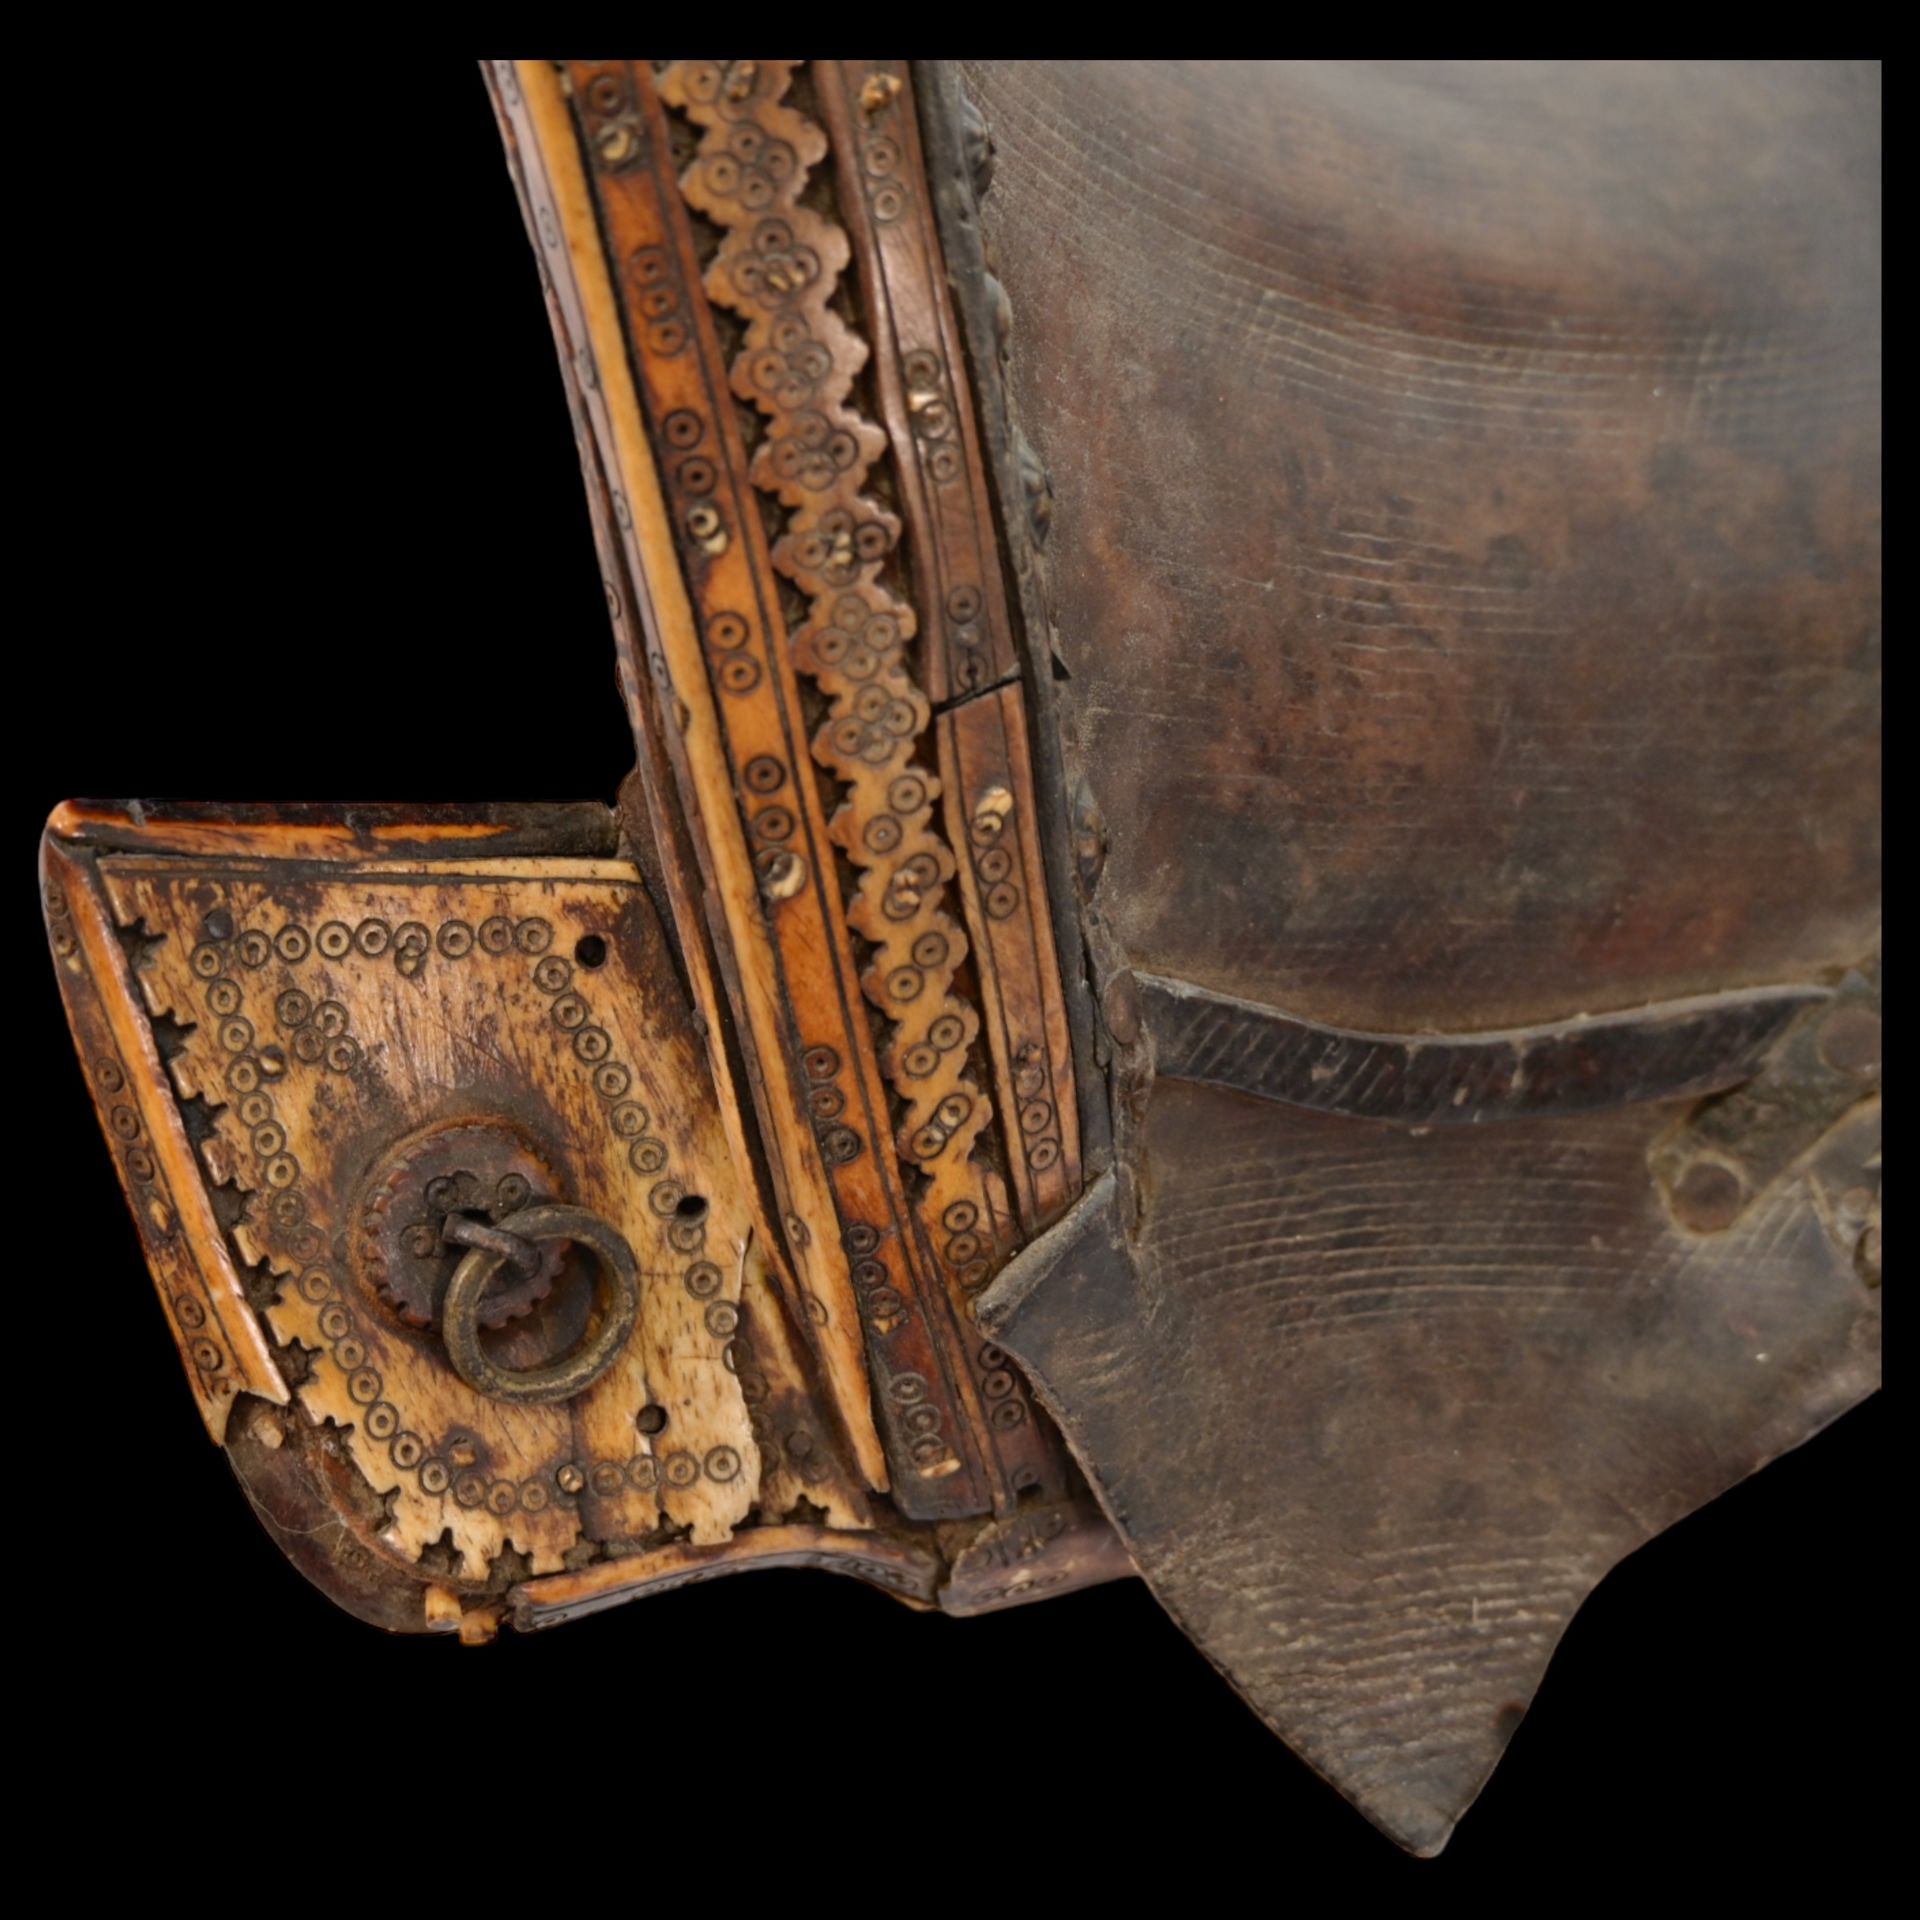 Rare antique Islamic Ottoman, Persian or Central Asia saddle for horseback, 18th century. - Image 8 of 12